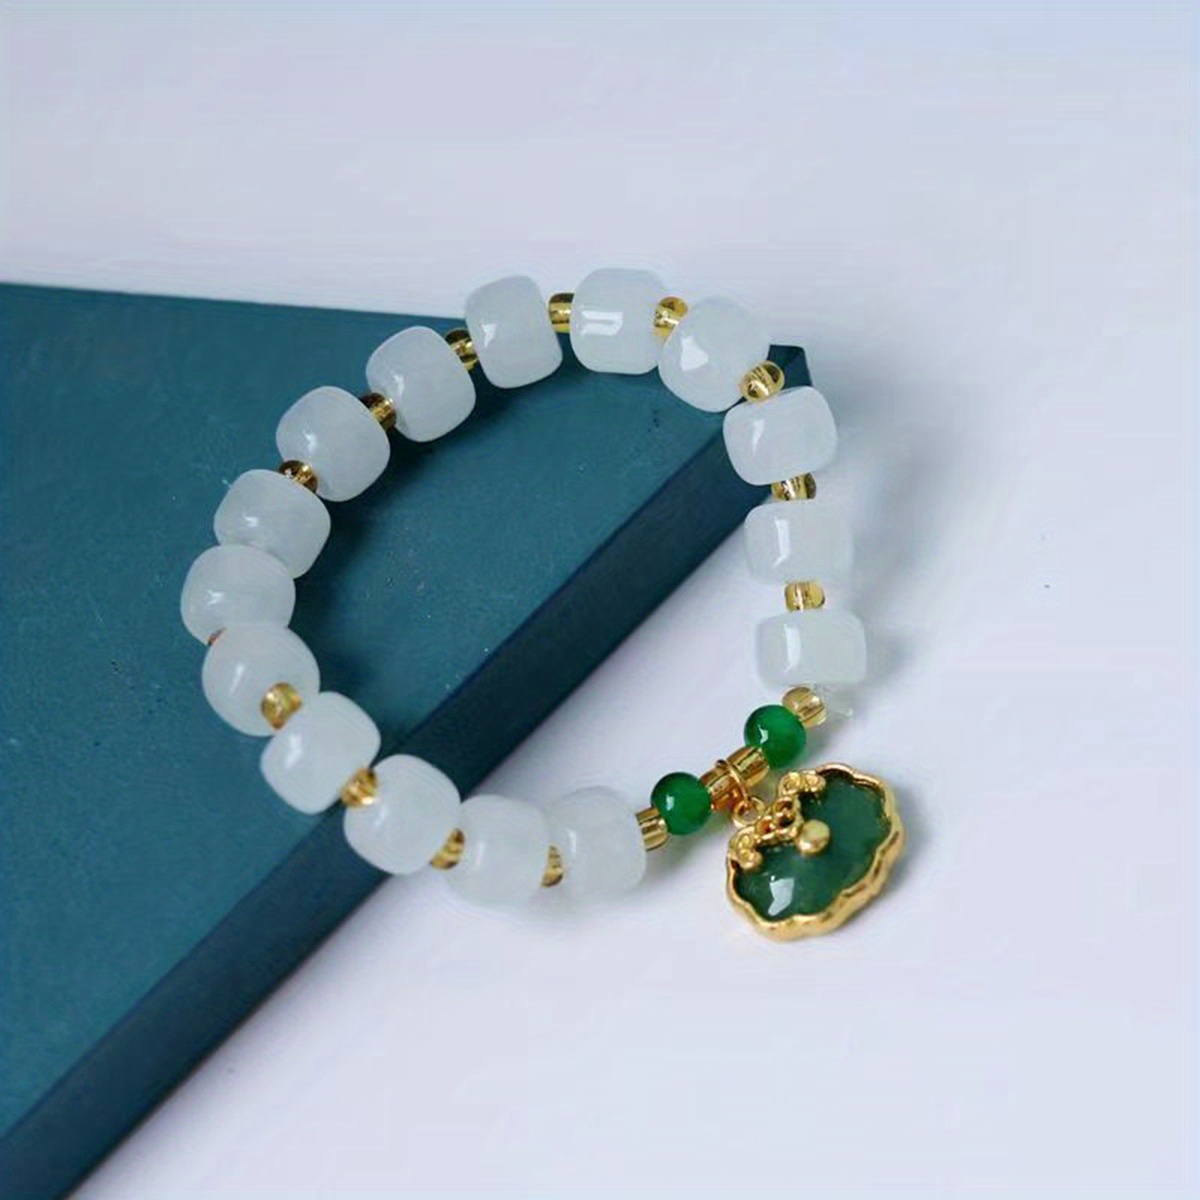 Joez Wonderful 20pcs Jade Rabbit Charm Pendants for Jewelry Making, Bunny Beads Pendants Jewelry Charms for Earring Necklace Bracelet DIY Handmade